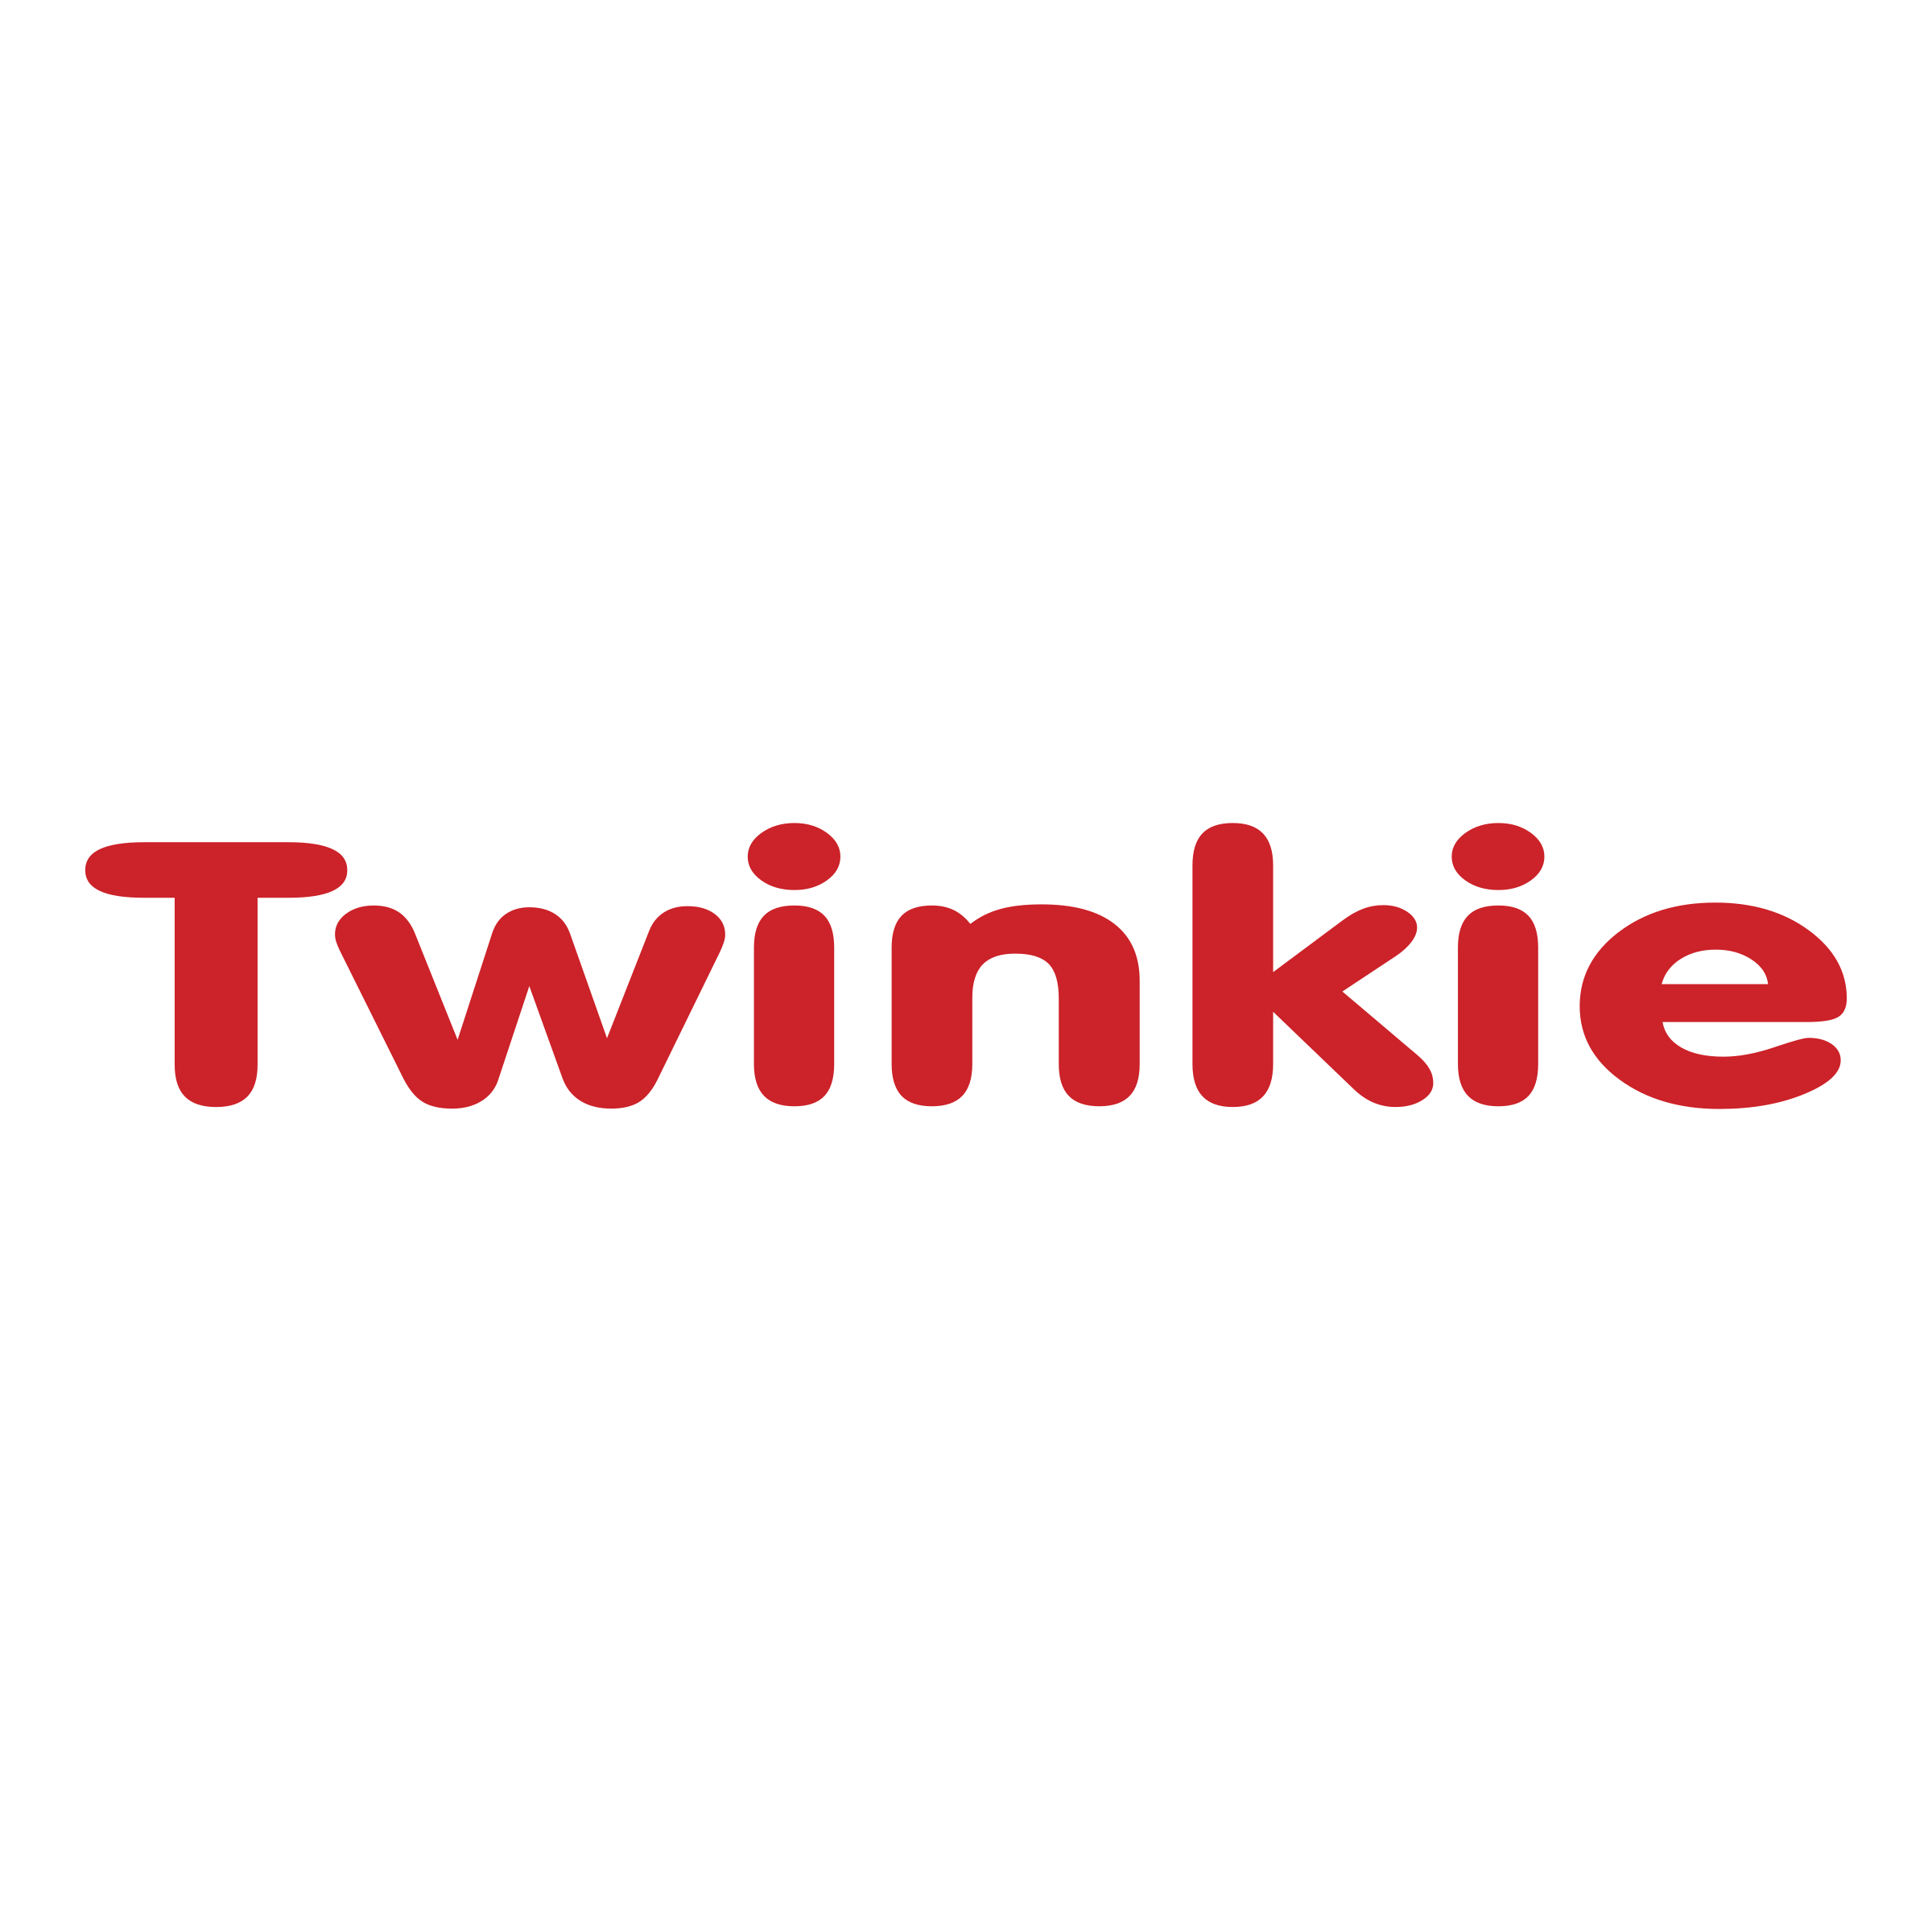 Twinkie Logo - Twinkie Logo PNG Transparent & SVG Vector - Freebie Supply